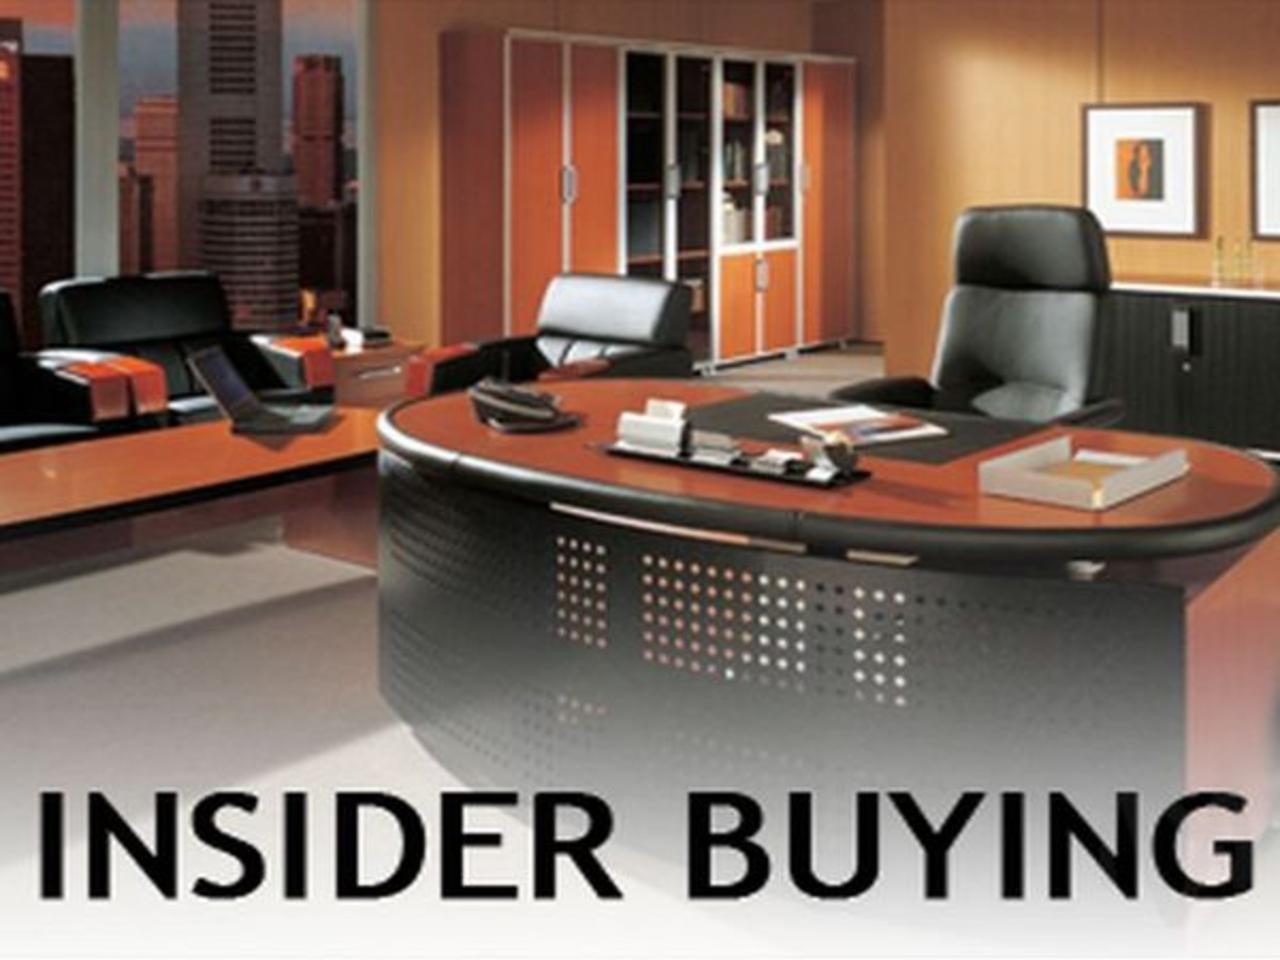 Thursday 11/4 Insider Buying Report: LSXMA, FISV